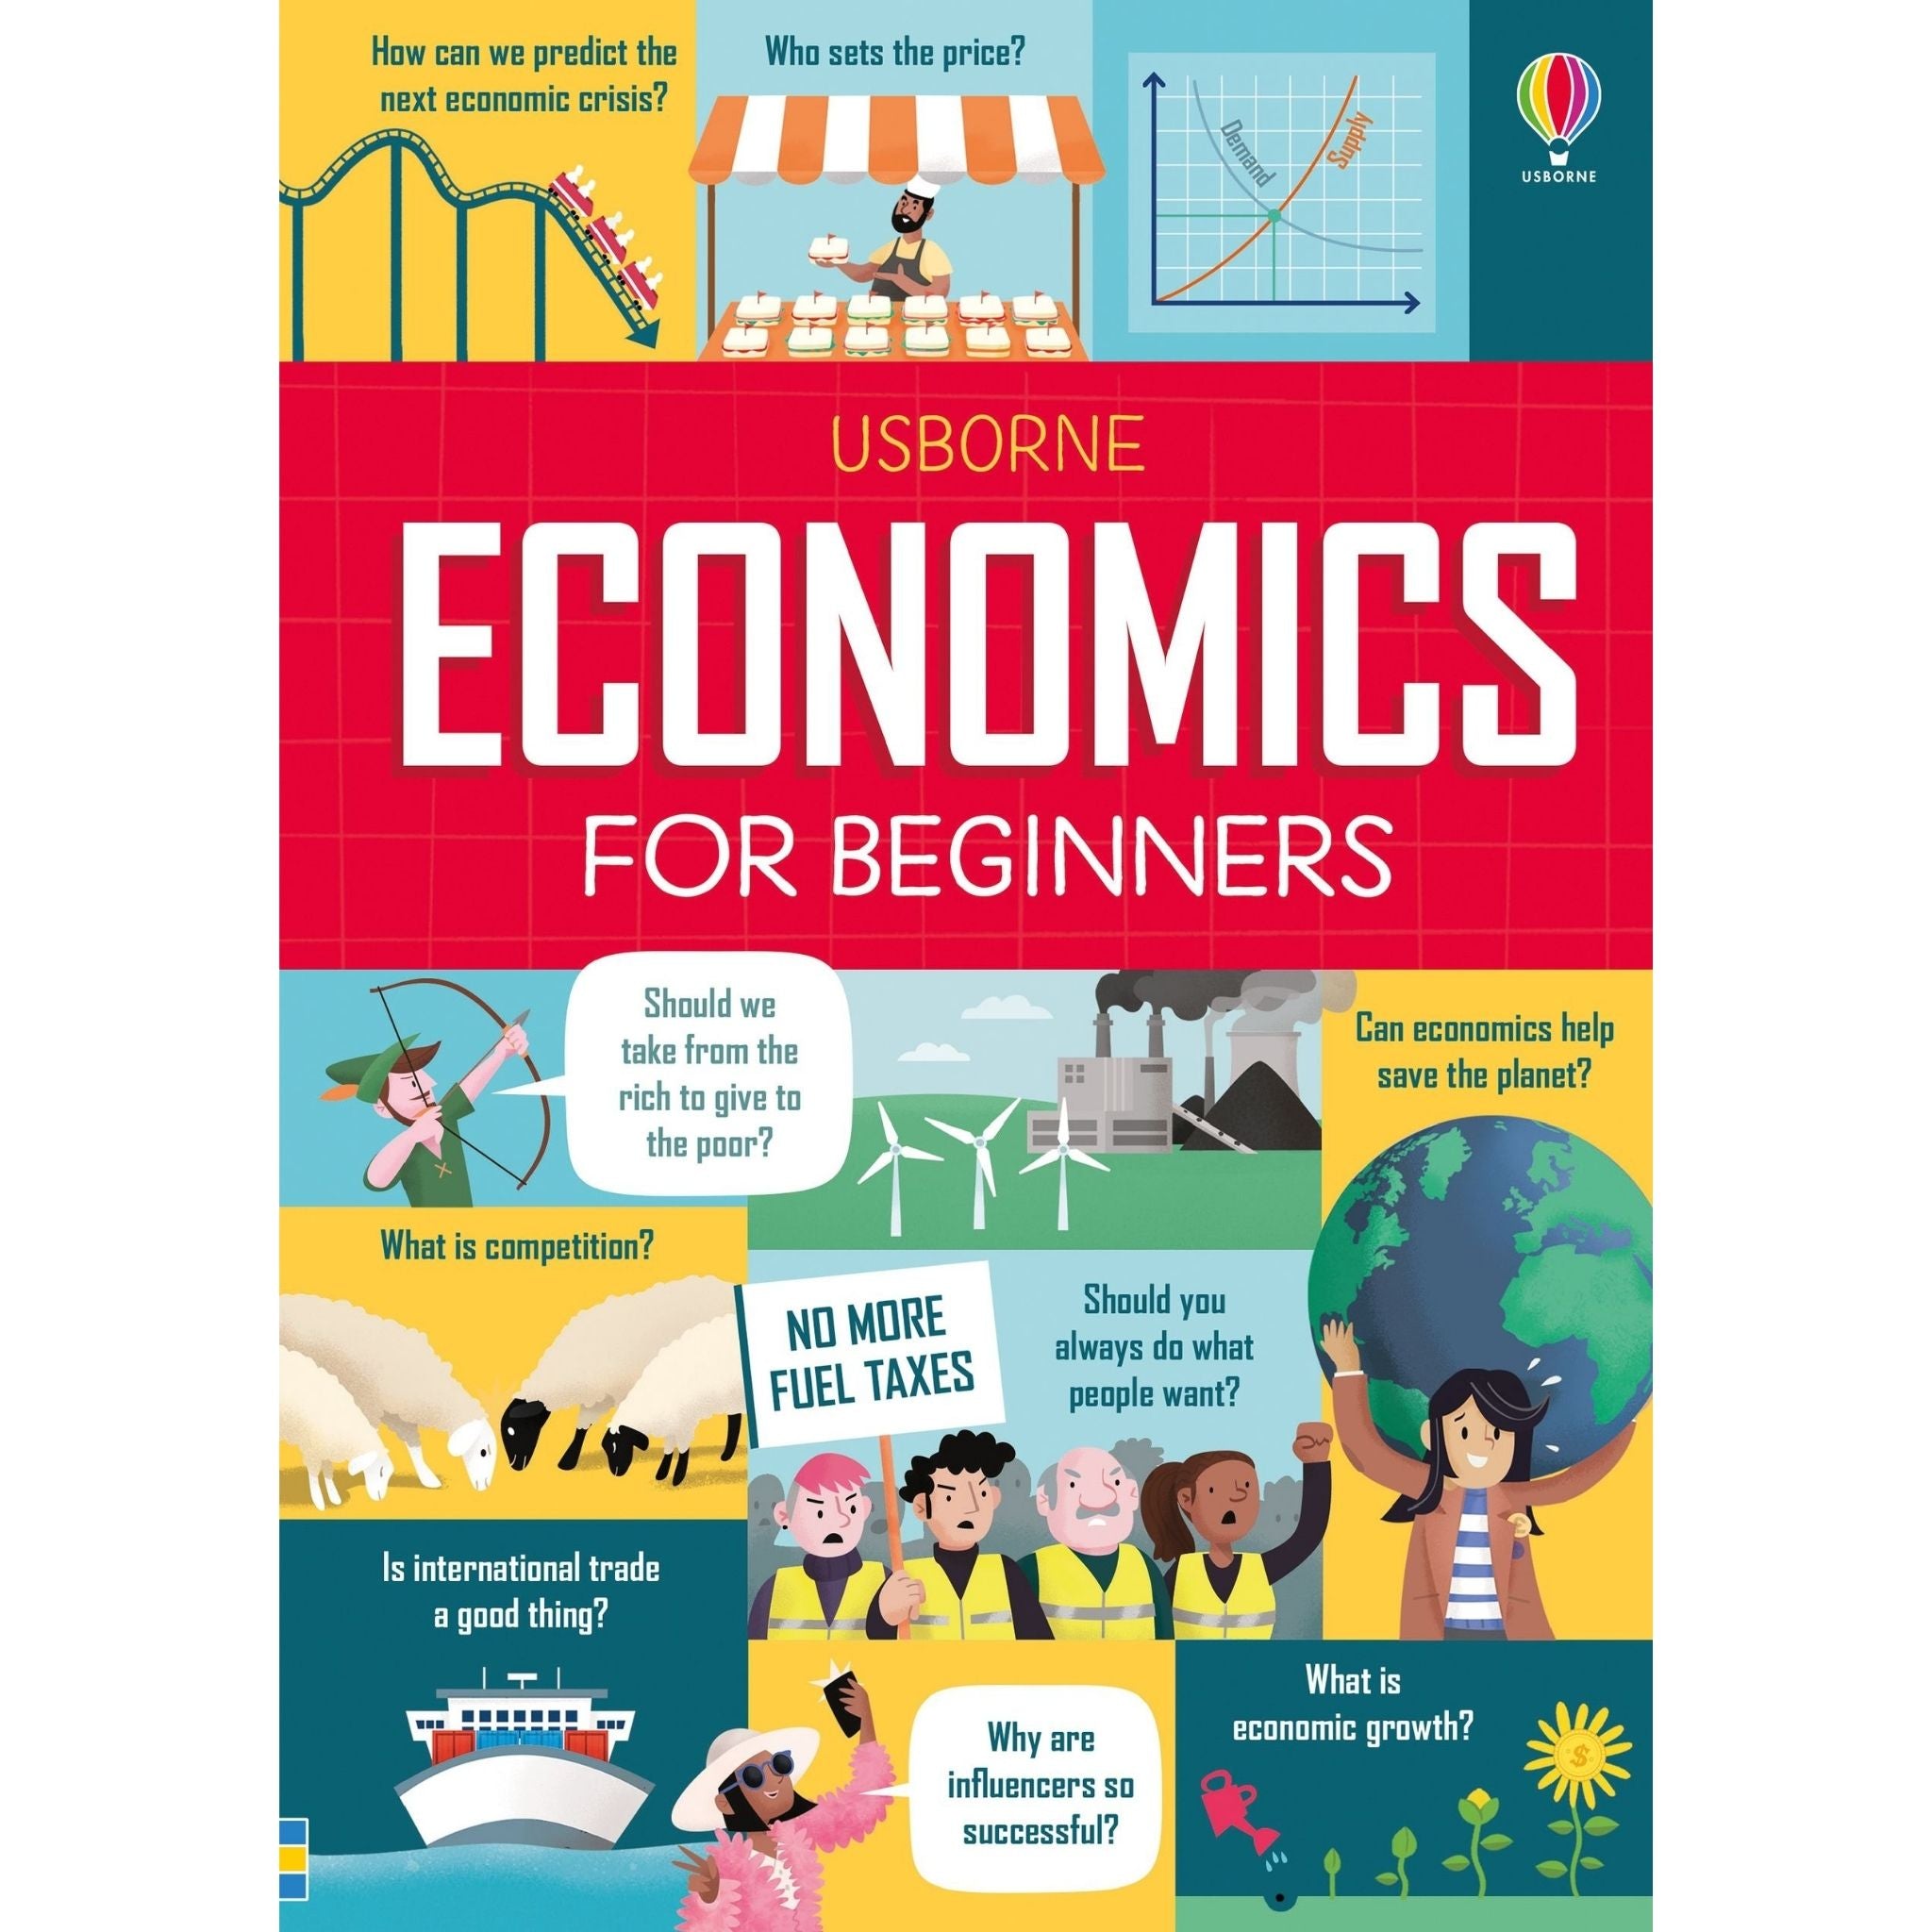 Economics For Beginners